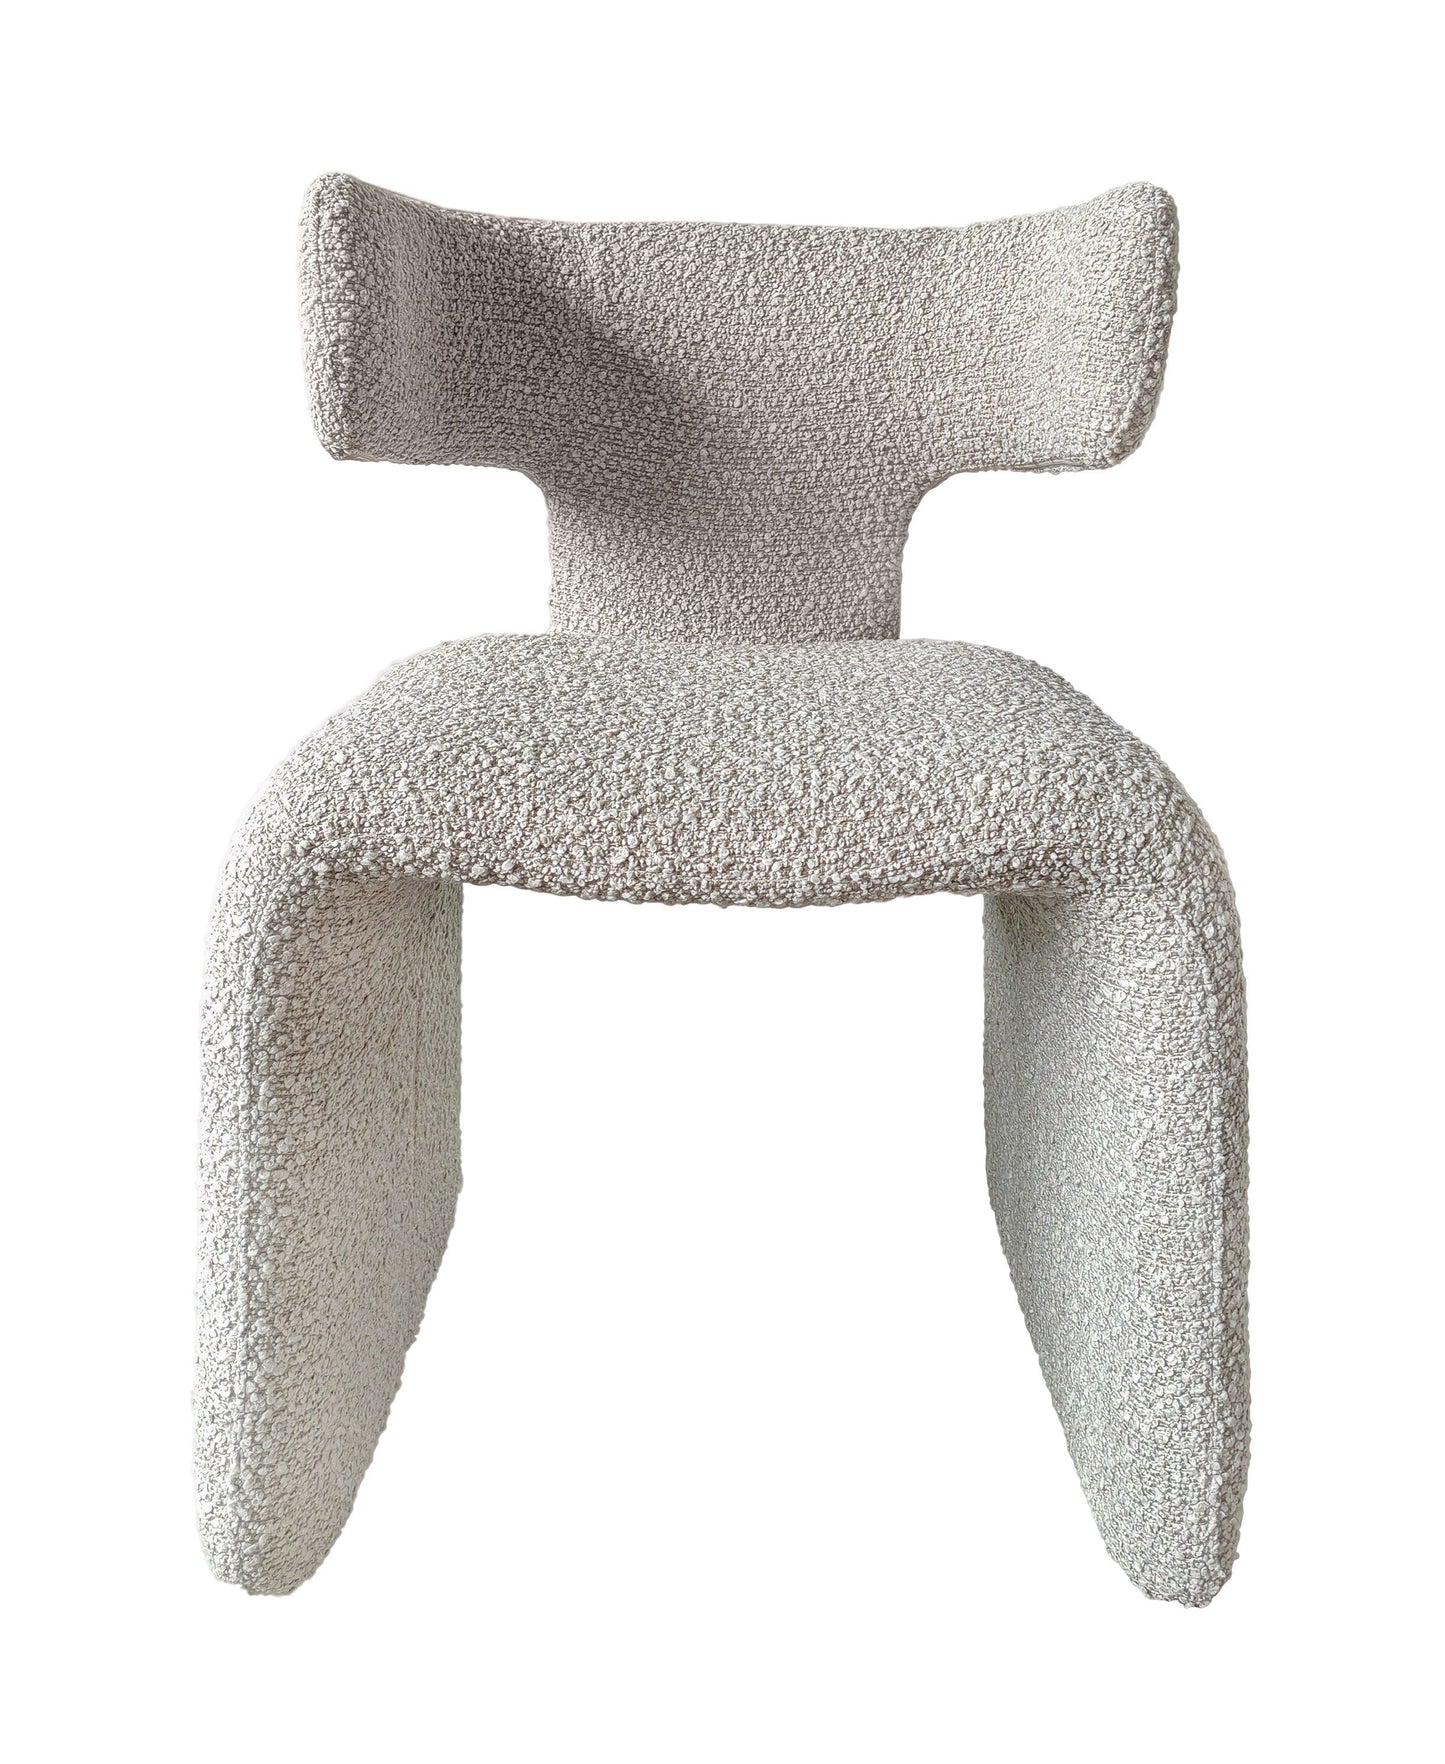 Modrest Bergman - Modern Off-White Fabric Dining Chair